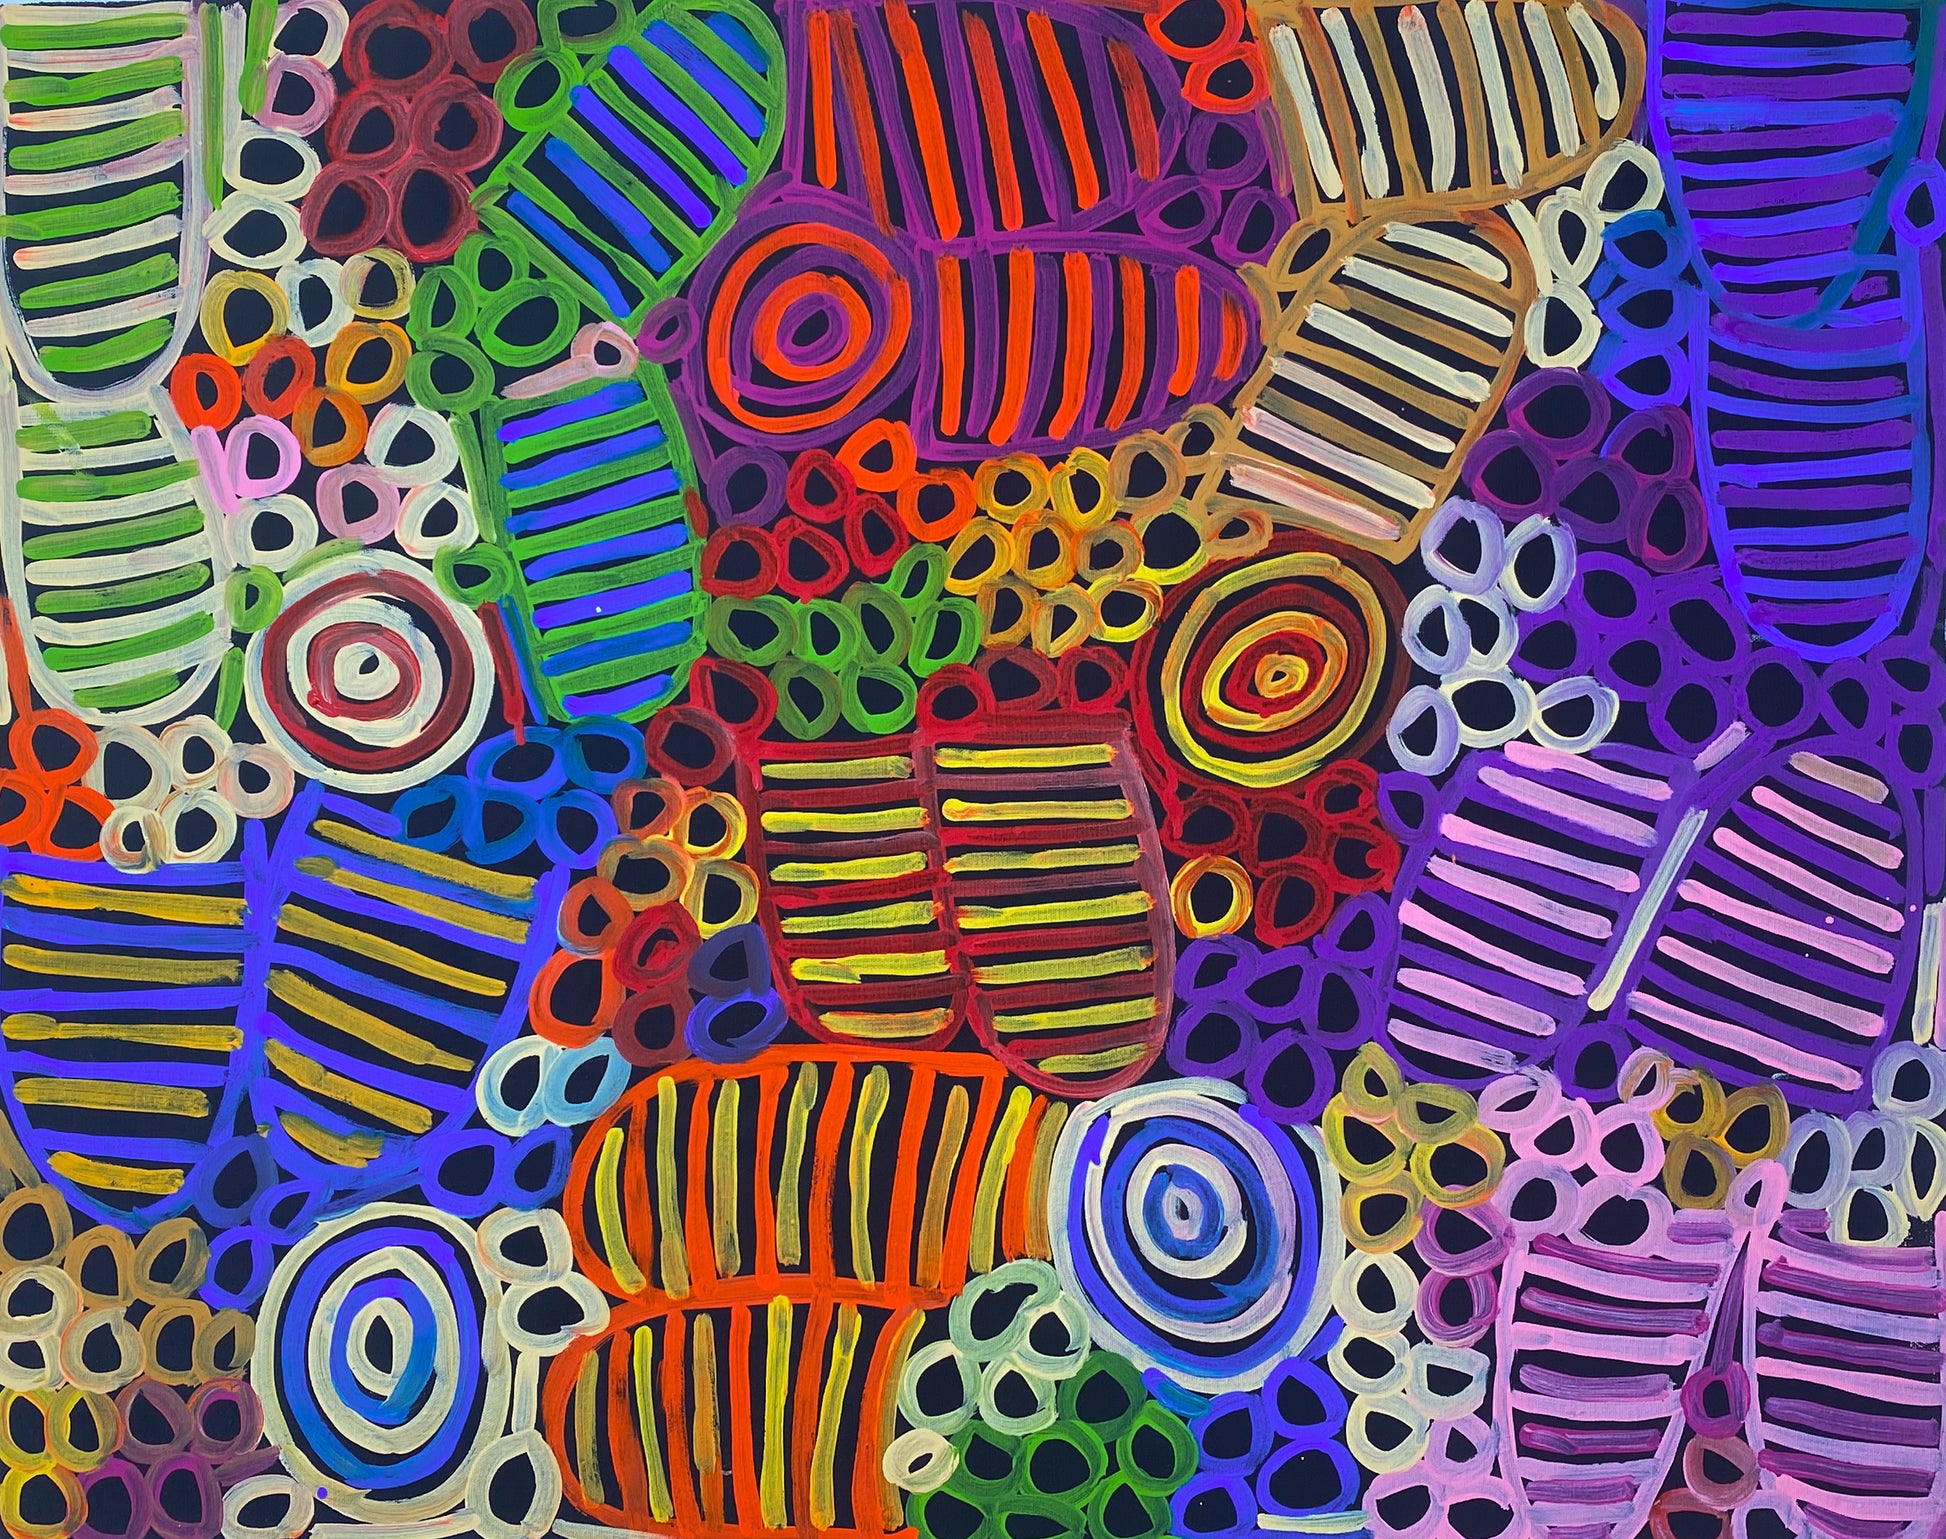 Betty Club Mbitjana - Utopia - Indigenous Art - Aboriginal Art - Australian Painting - Iconography - Symbolism - Body Paint - Women's Ceremony - Darwin Based Gallery 